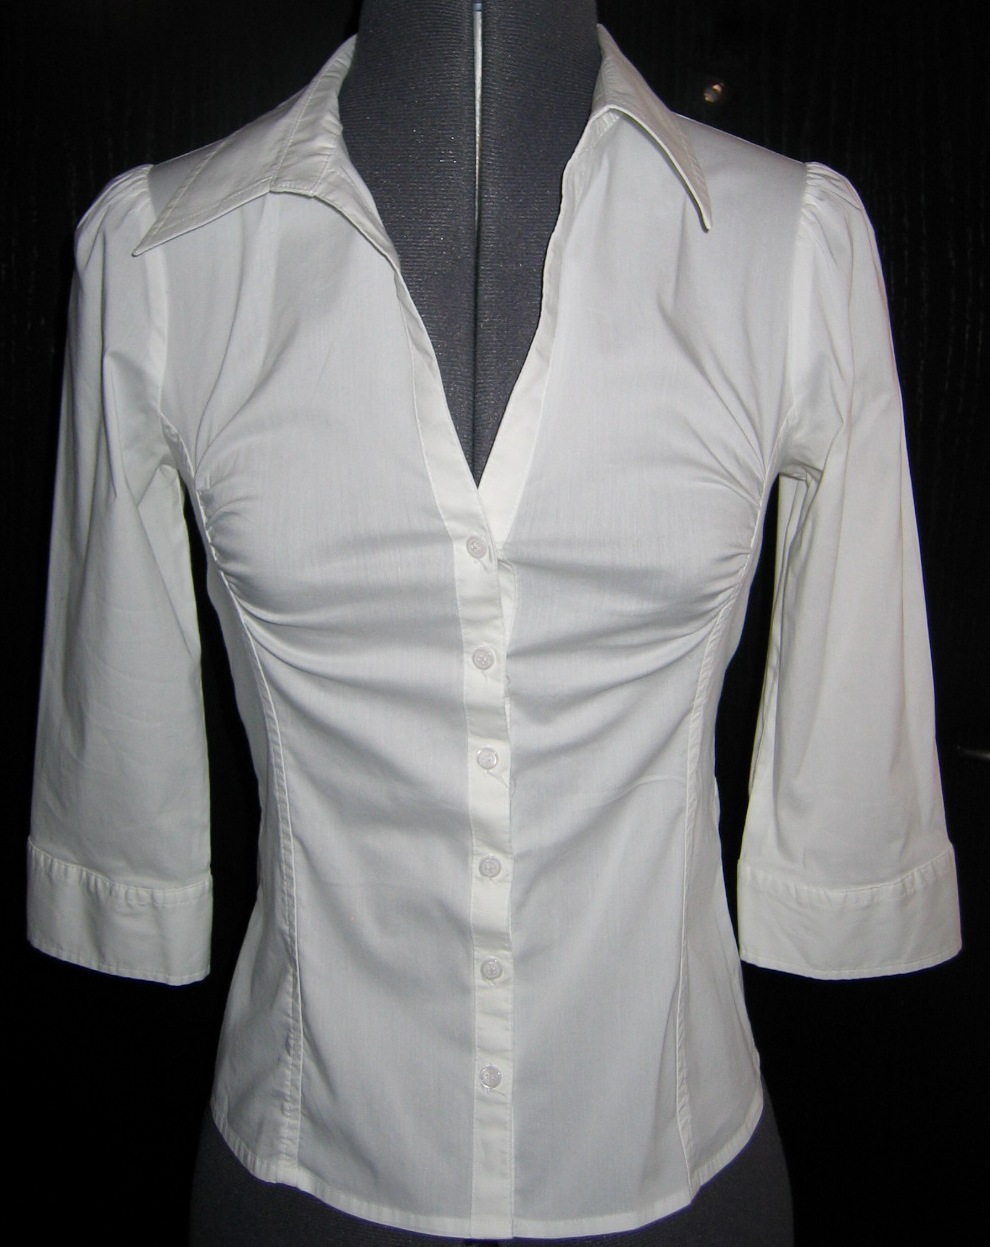 Femme: The Classic White Shirt